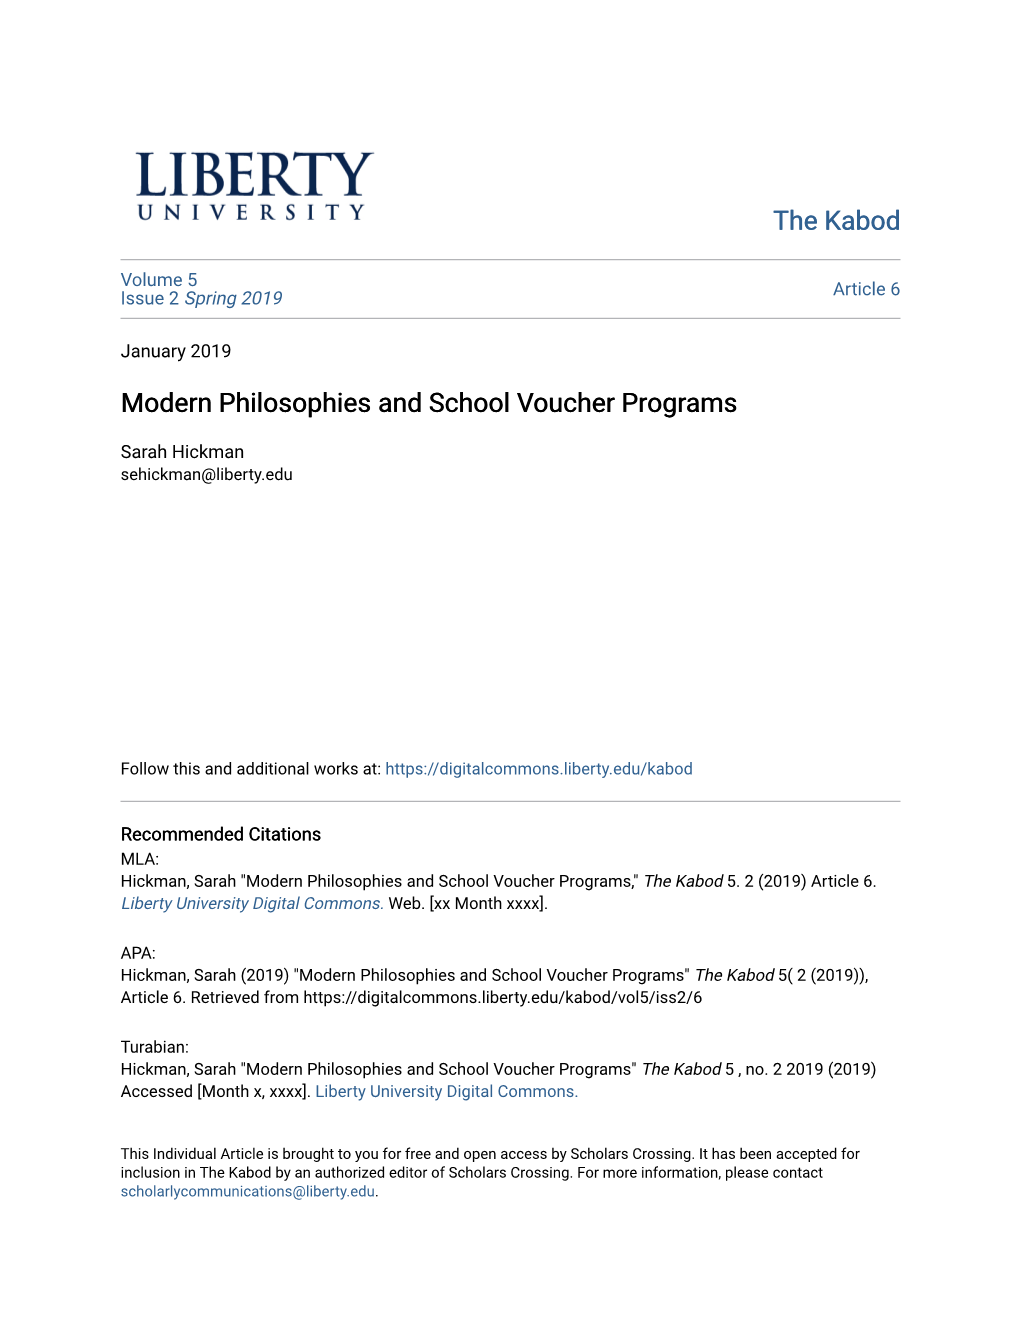 Modern Philosophies and School Voucher Programs